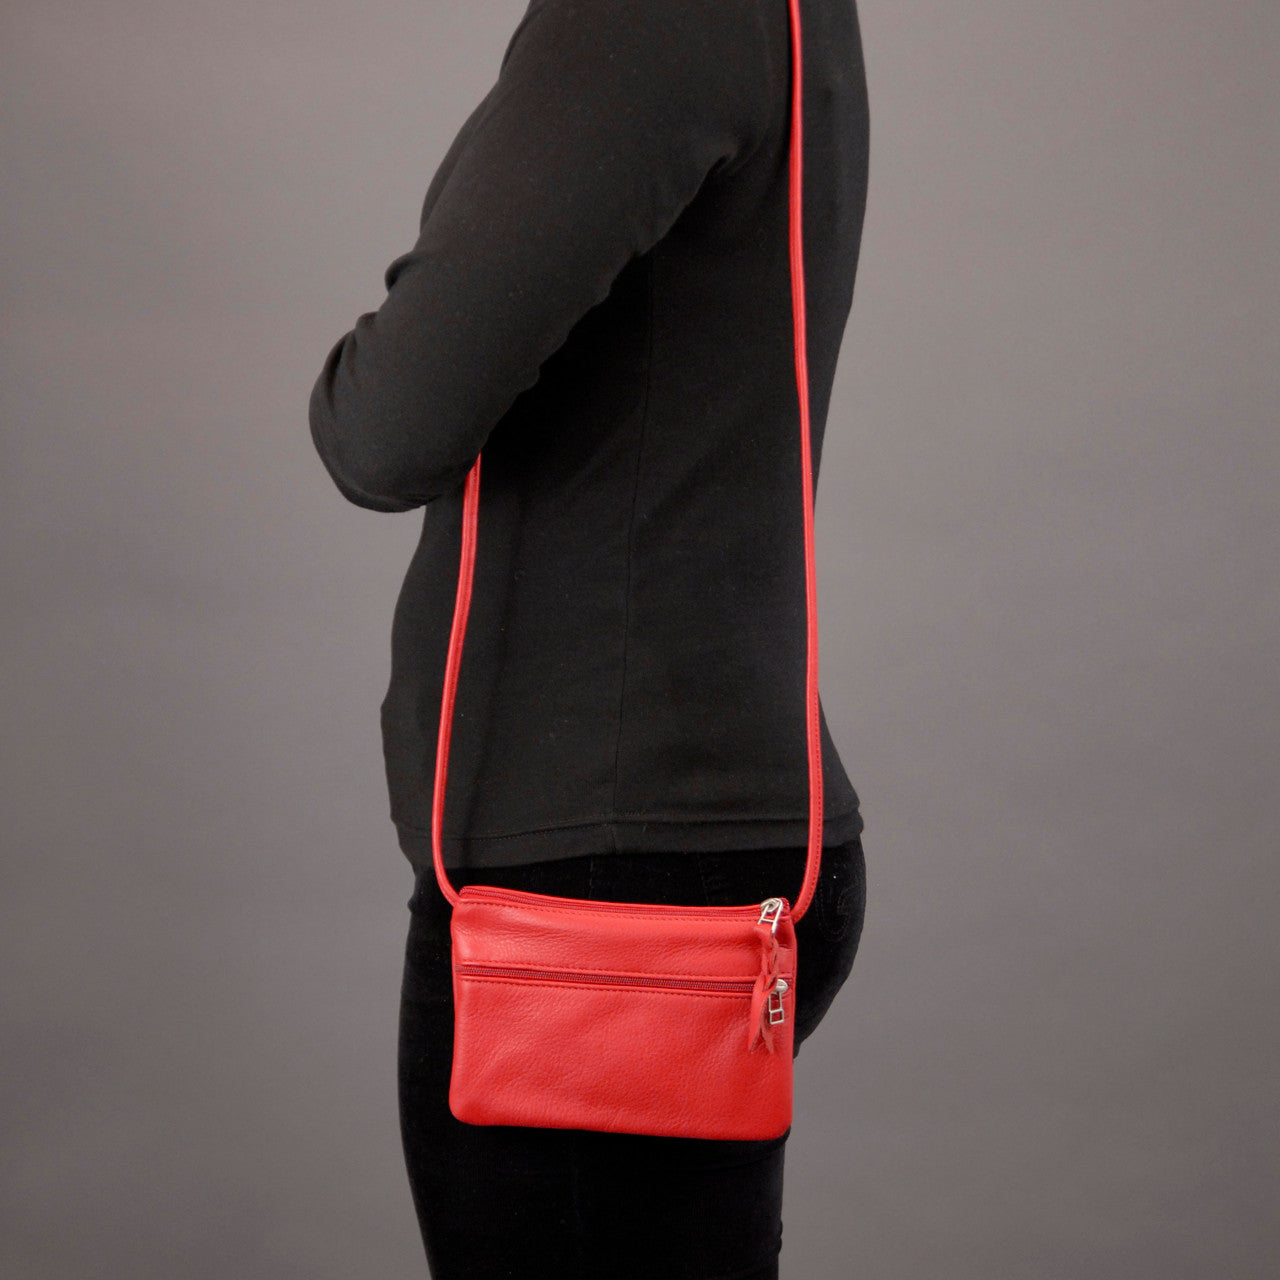 SVEN Style No. 008 Crossbody/Shoulder Bag red leather